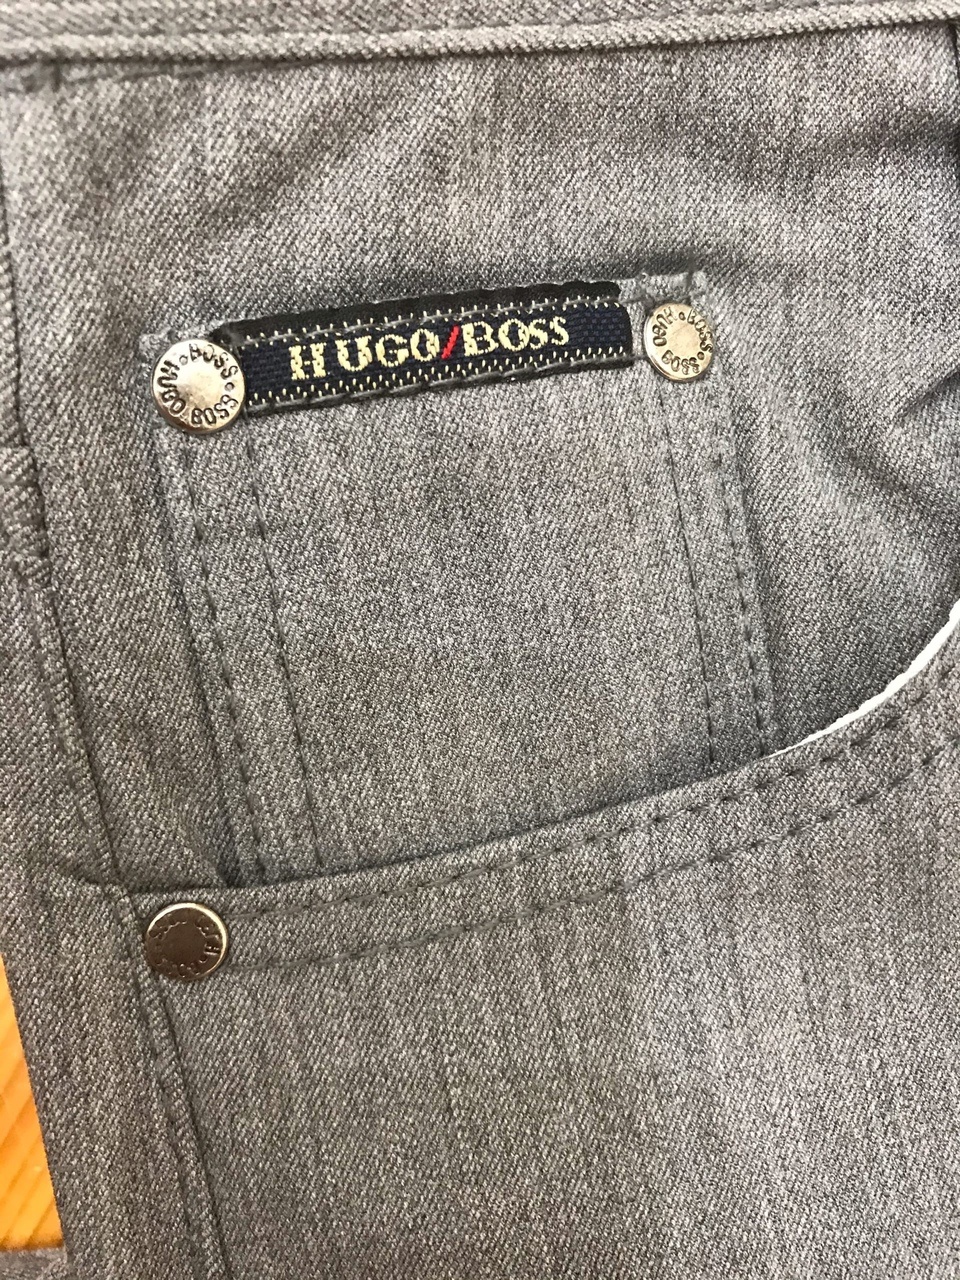 Брюки/джинсы Hugo Boss, размер W34 L34